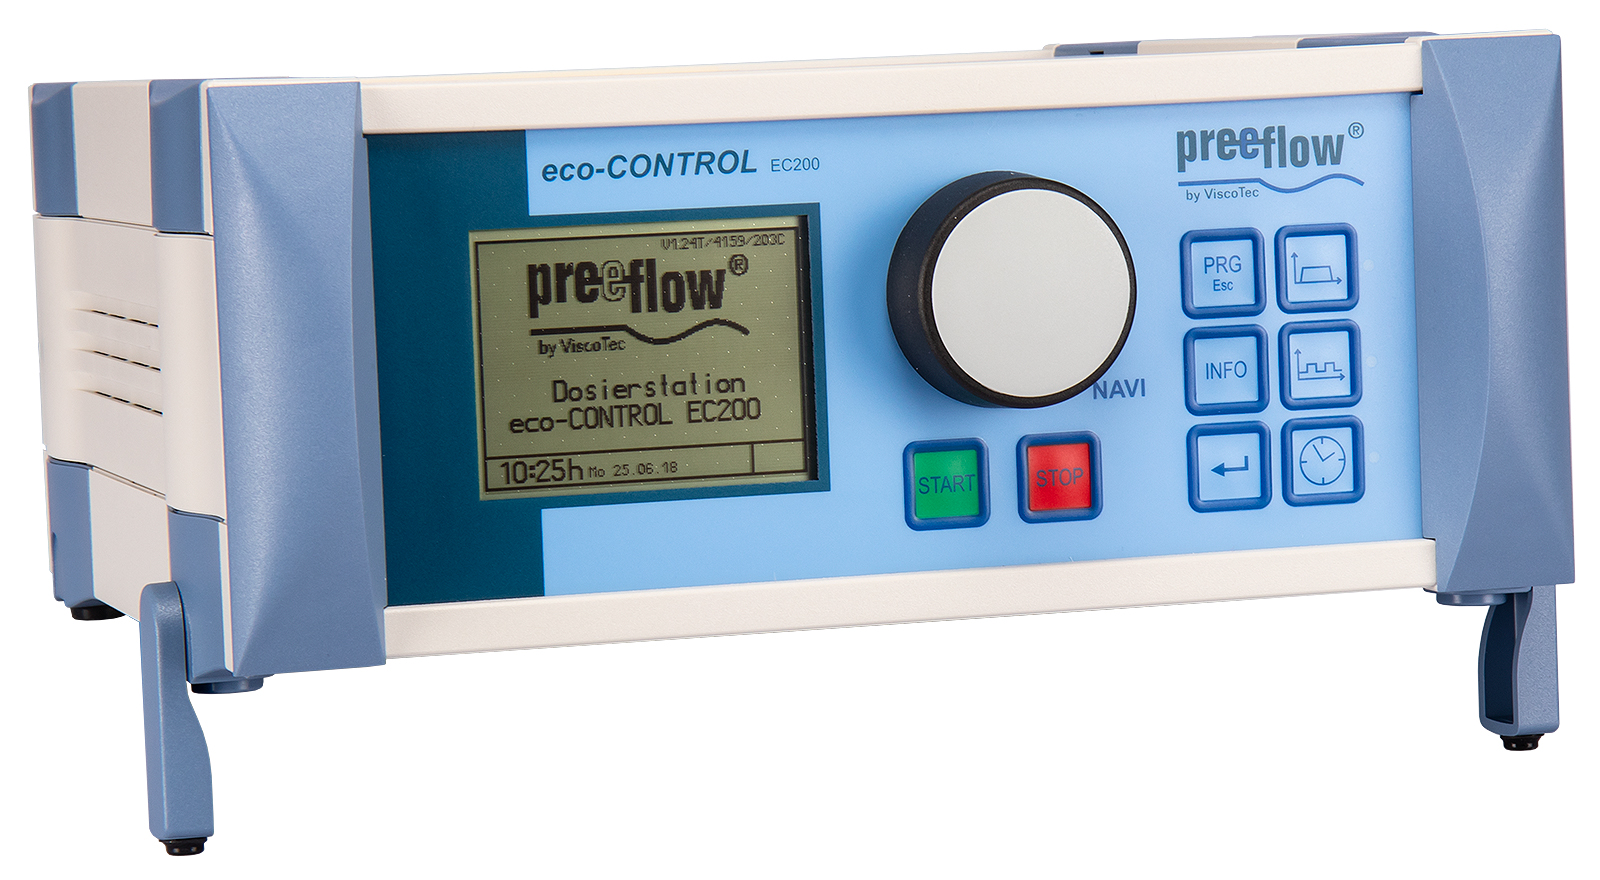 valve controller  preeflow® EC 200-K